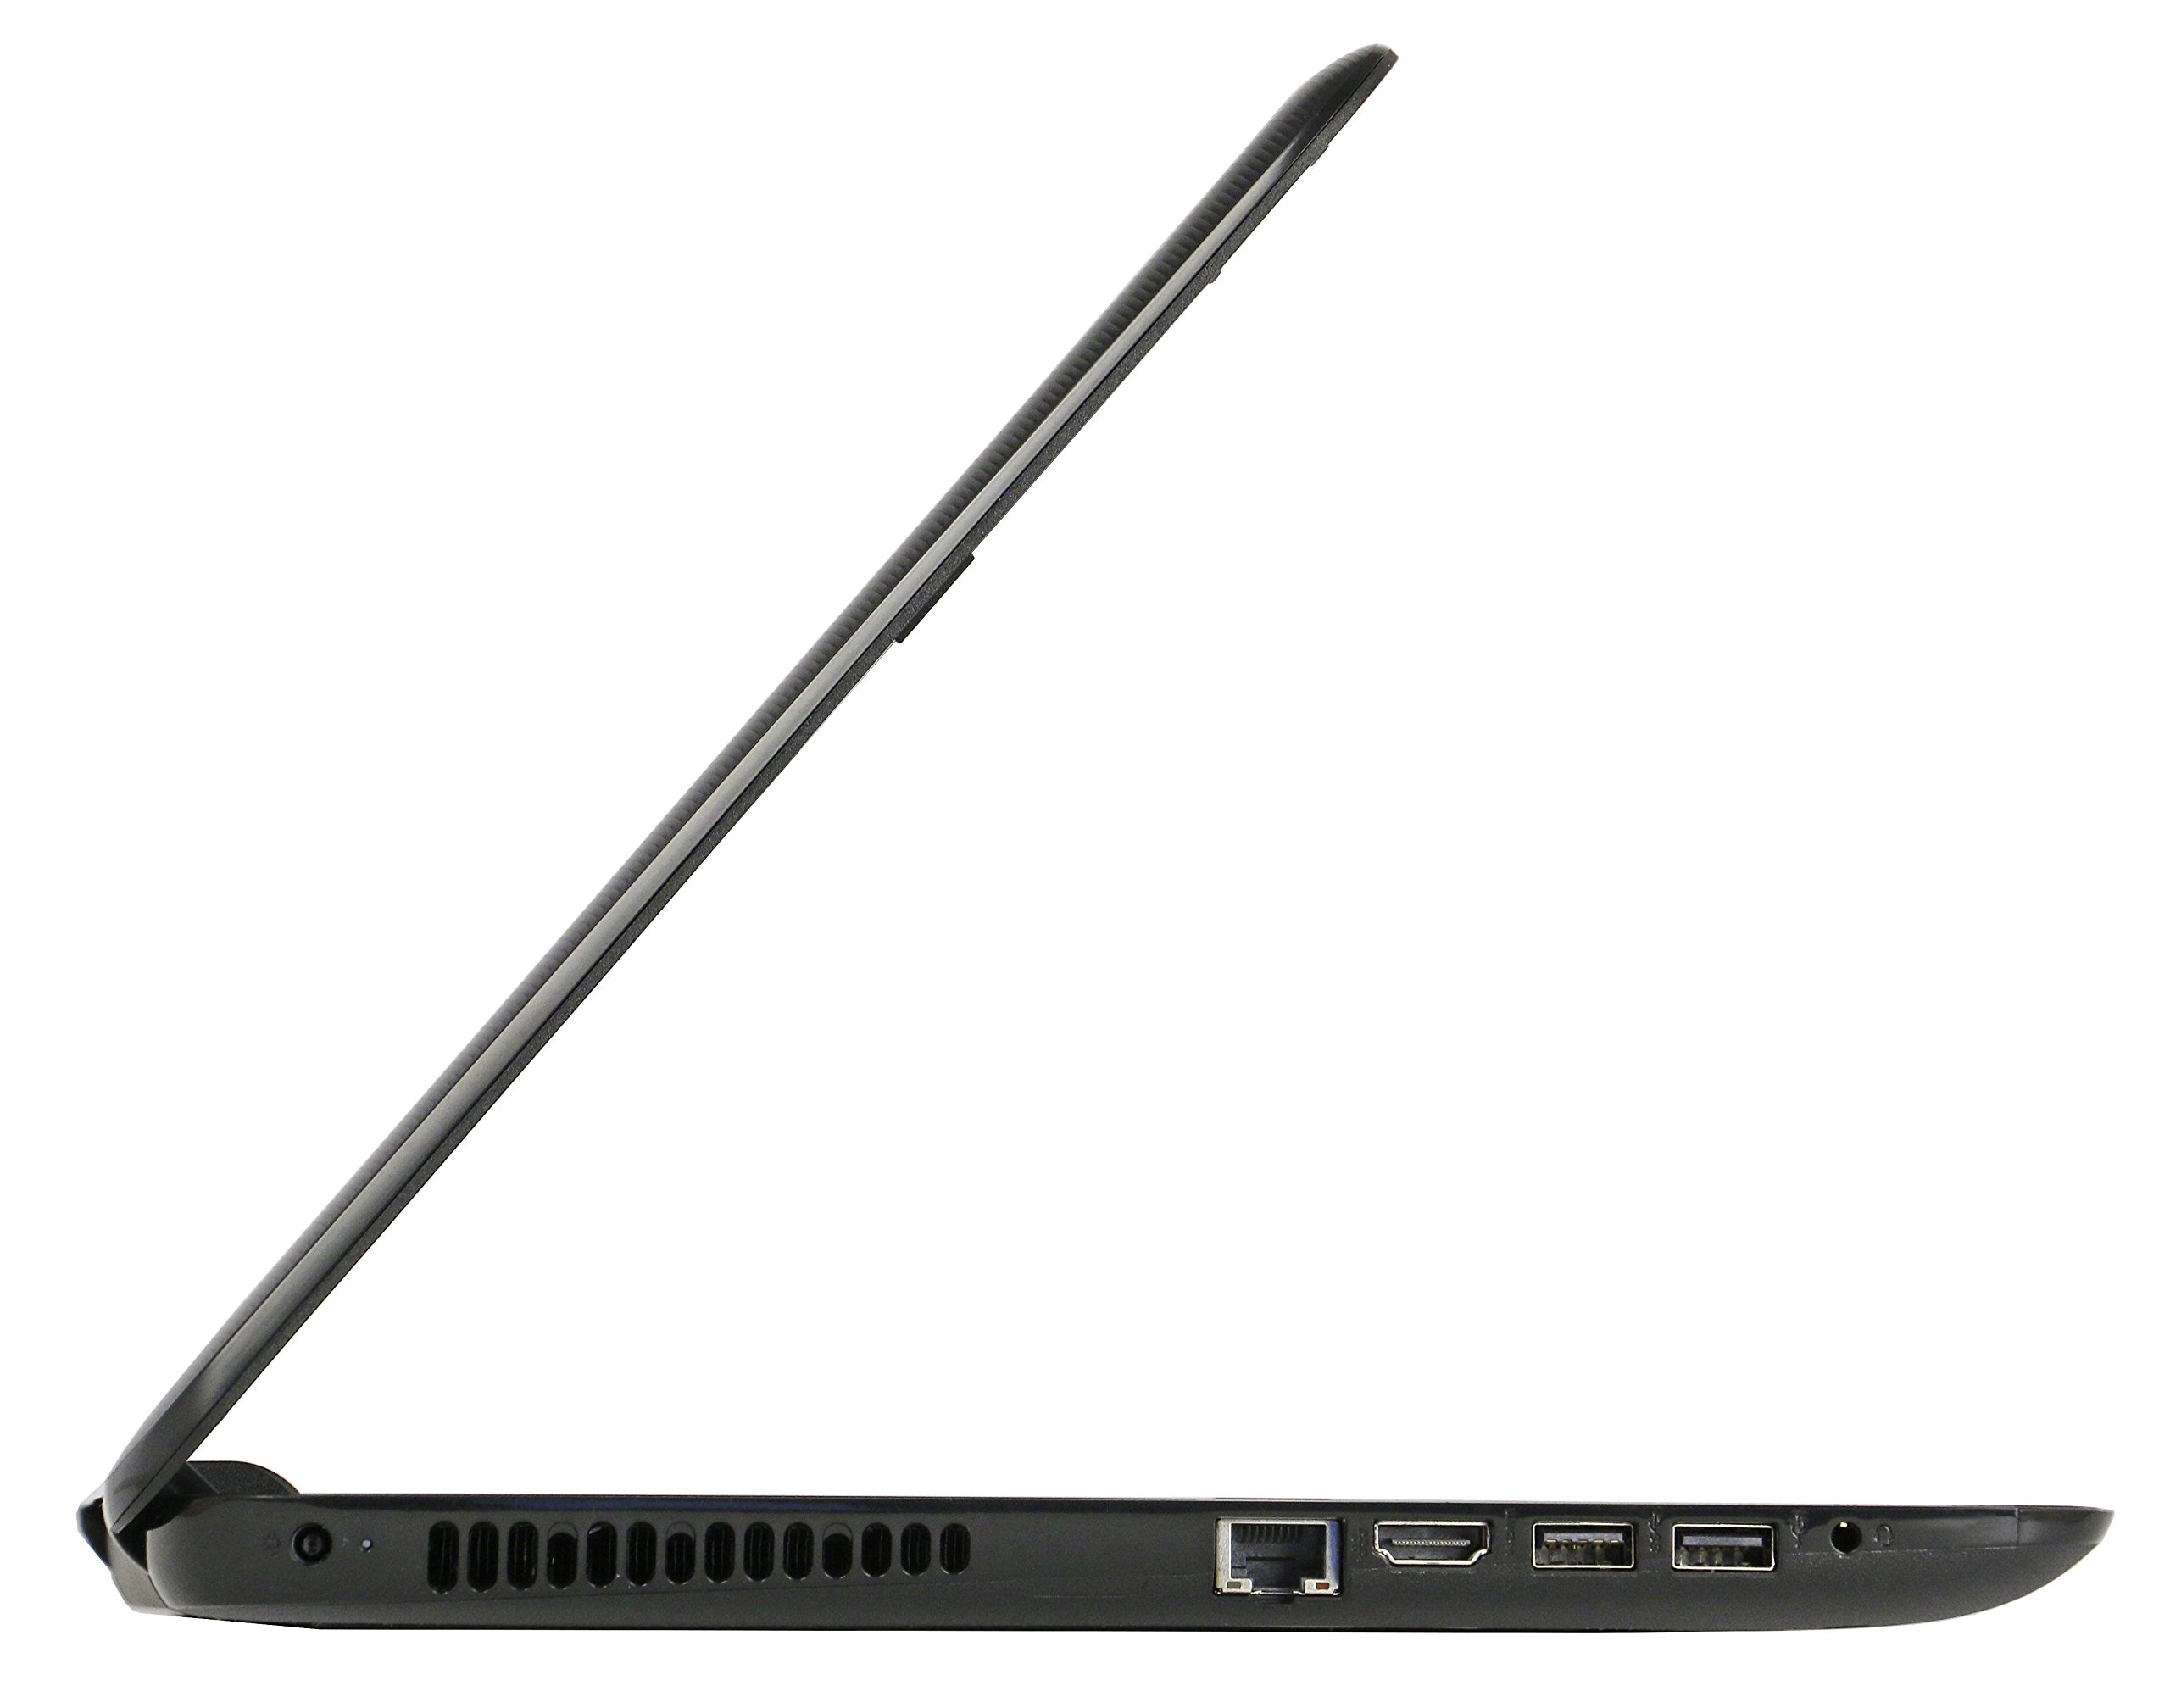 HP Notebook Laptop 15.6 HD Vibrant Display Quad Core AMD E2-7110 APU 1.8GHz 4GB RAM 500GB HDD DVD Windows 10